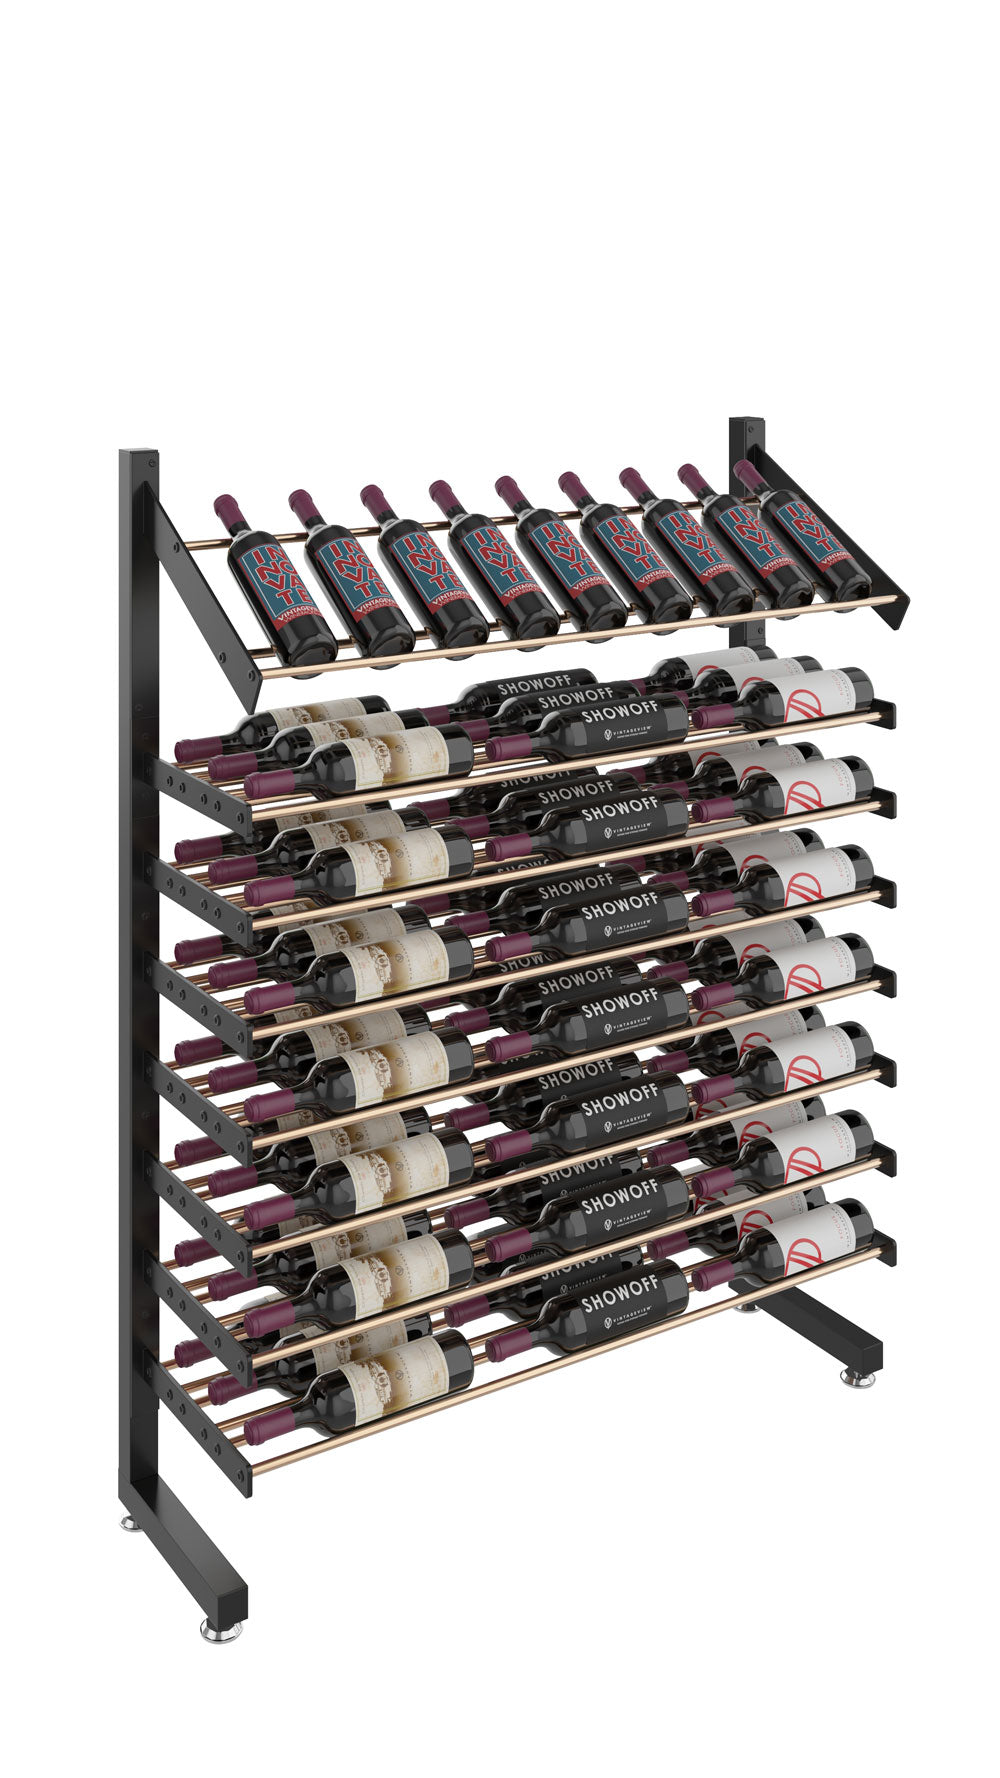 Evolution Island Display Retail Wine Rack